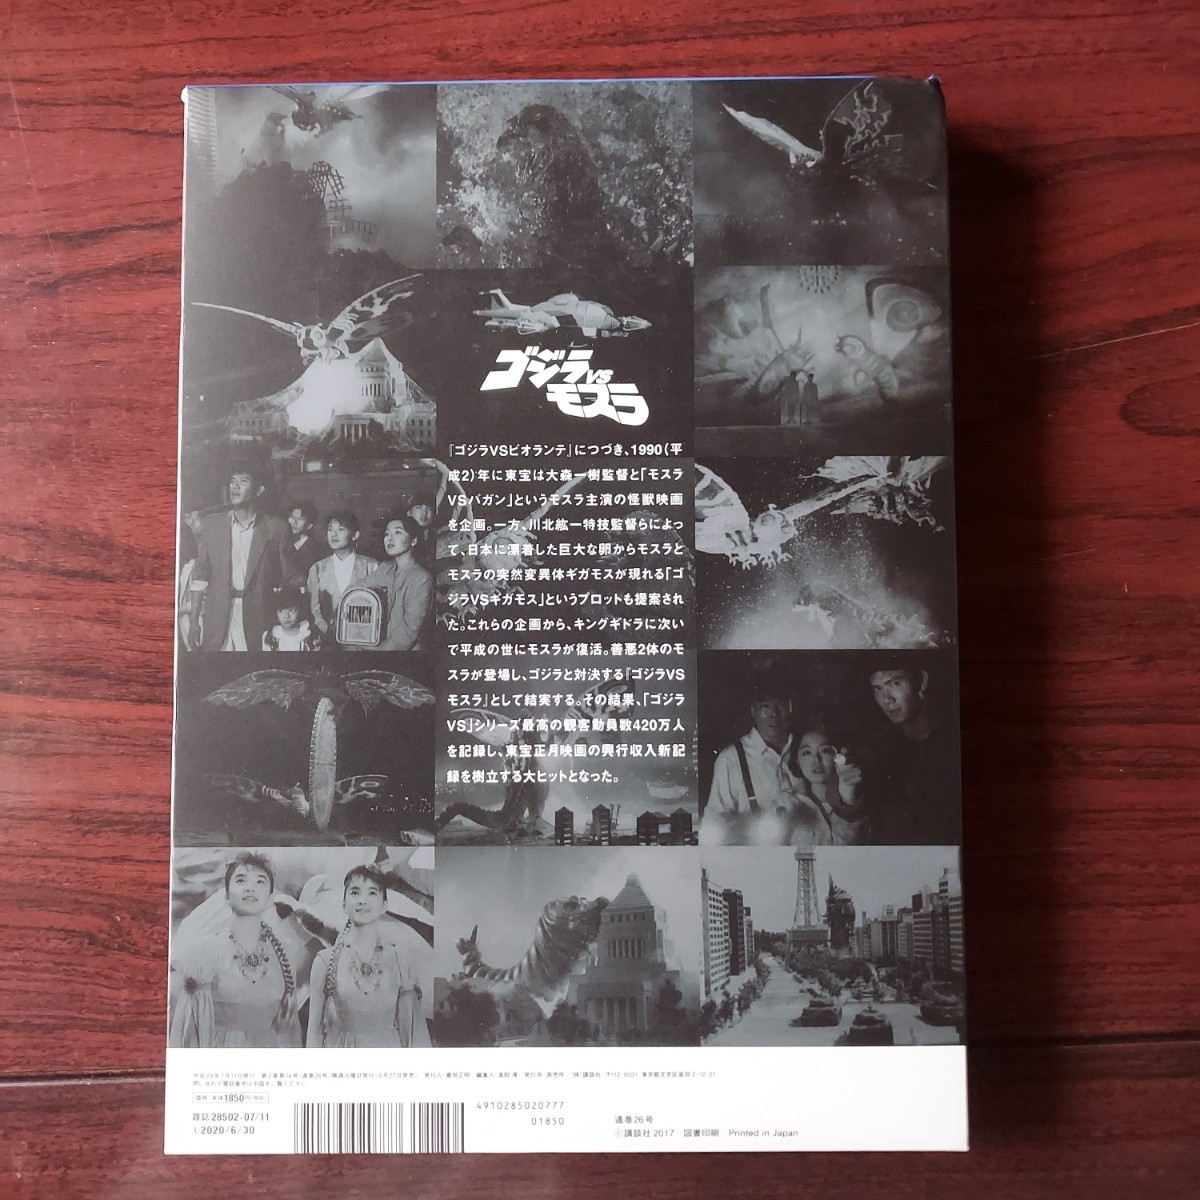  Godzilla VS Mothra 26*DVD appendix completion goods * Godzilla all movie DVD collectors BOX*1992 year public * poster unopened goods 